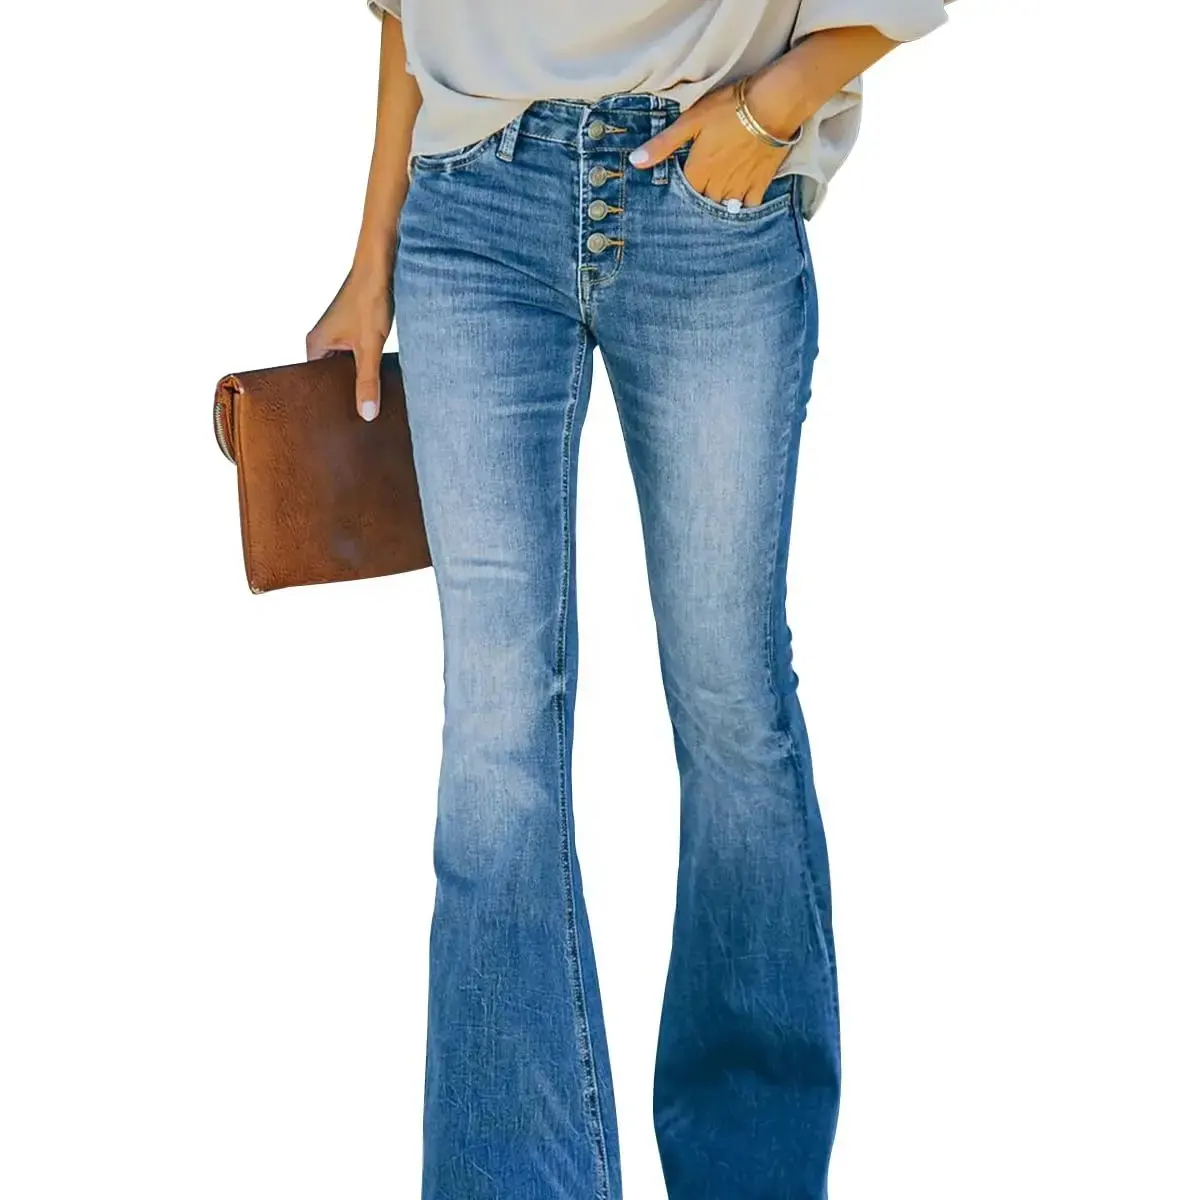 Calça jeans feminina flare Bell bottom cintura alta perna larga calça jeans elástica